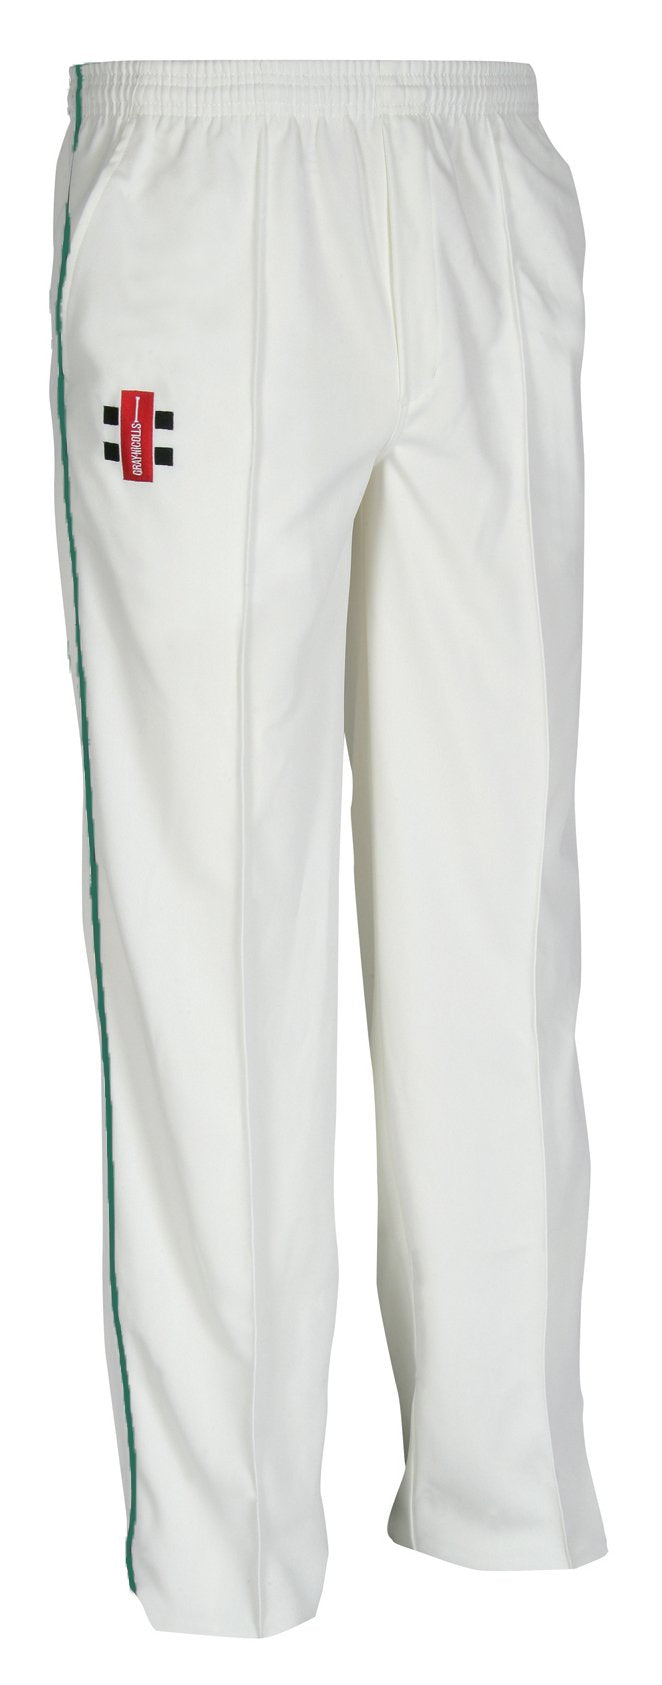 Elworth Cricket Club Matrix trousers